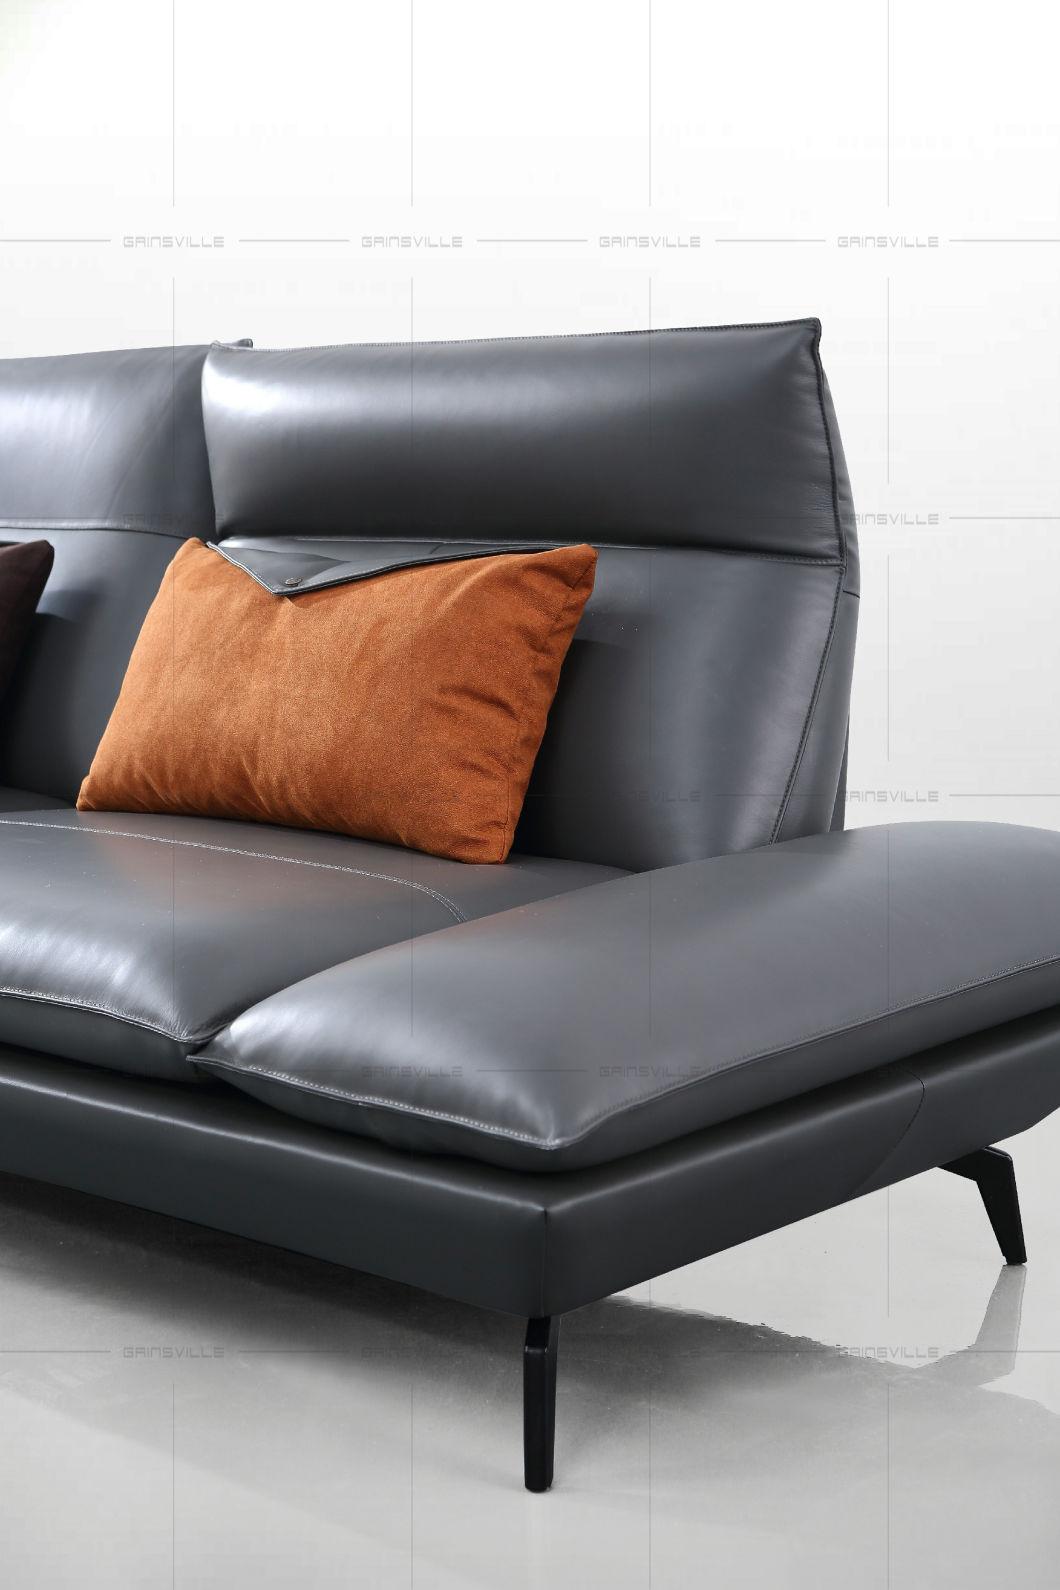 Hot Sale fashion Modern Living Room Sofa Modern Sofa Upholstered Sofa Fuctional Sofa